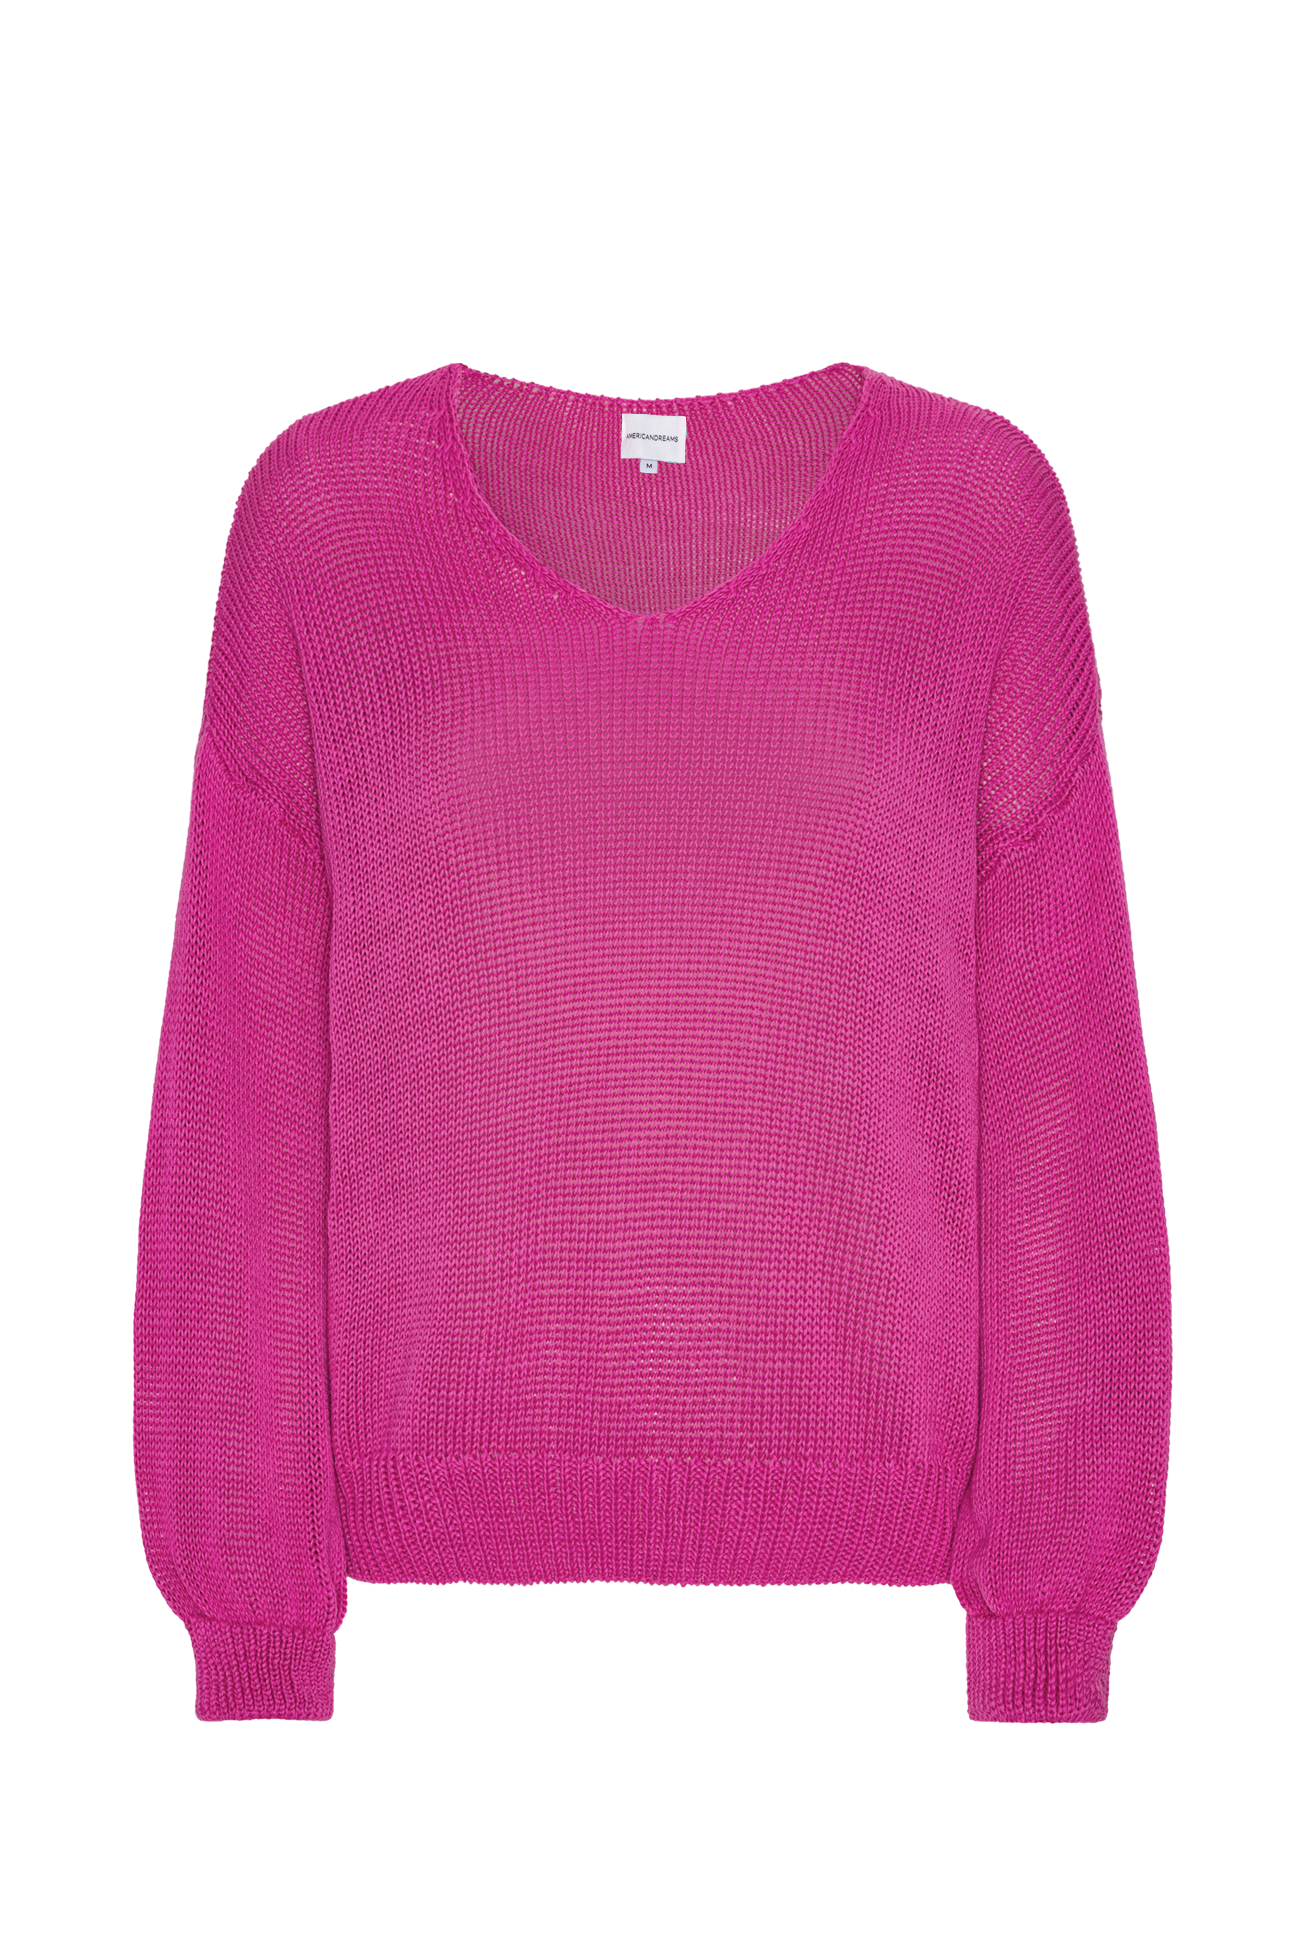 Milana LS Light Cotton Knit Neon Pink